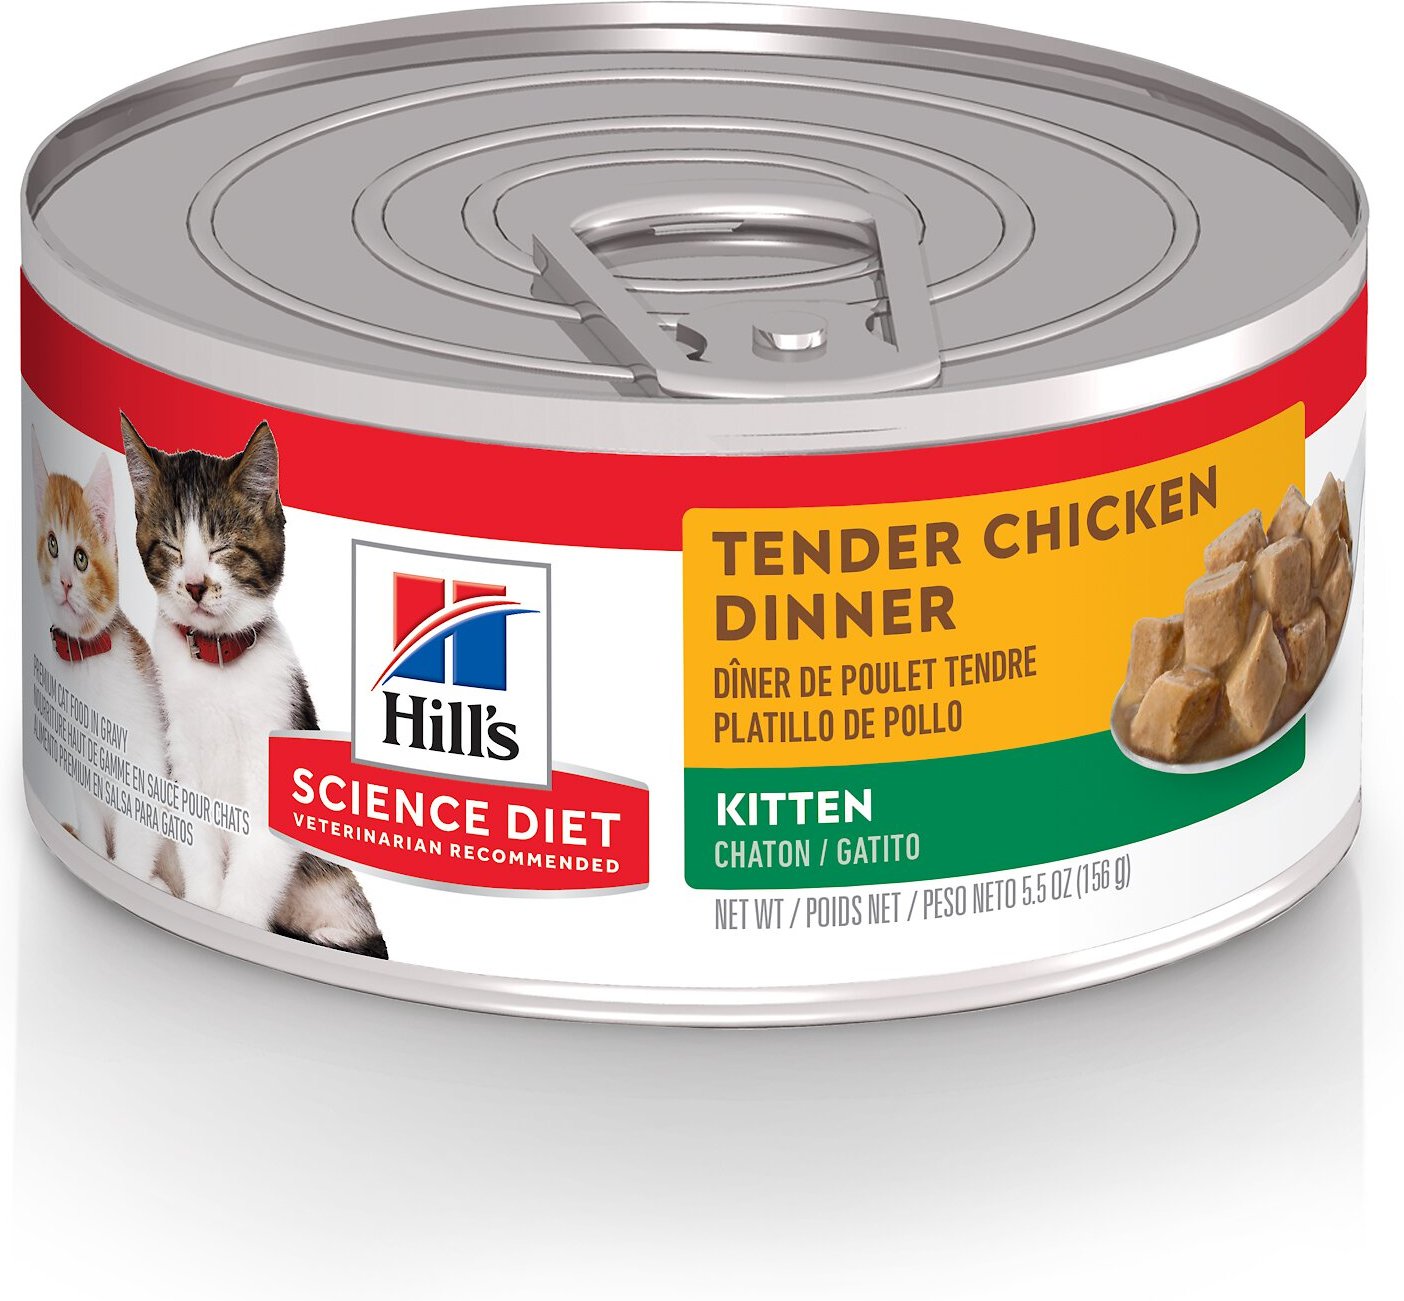 hill's science diet dry kitten food